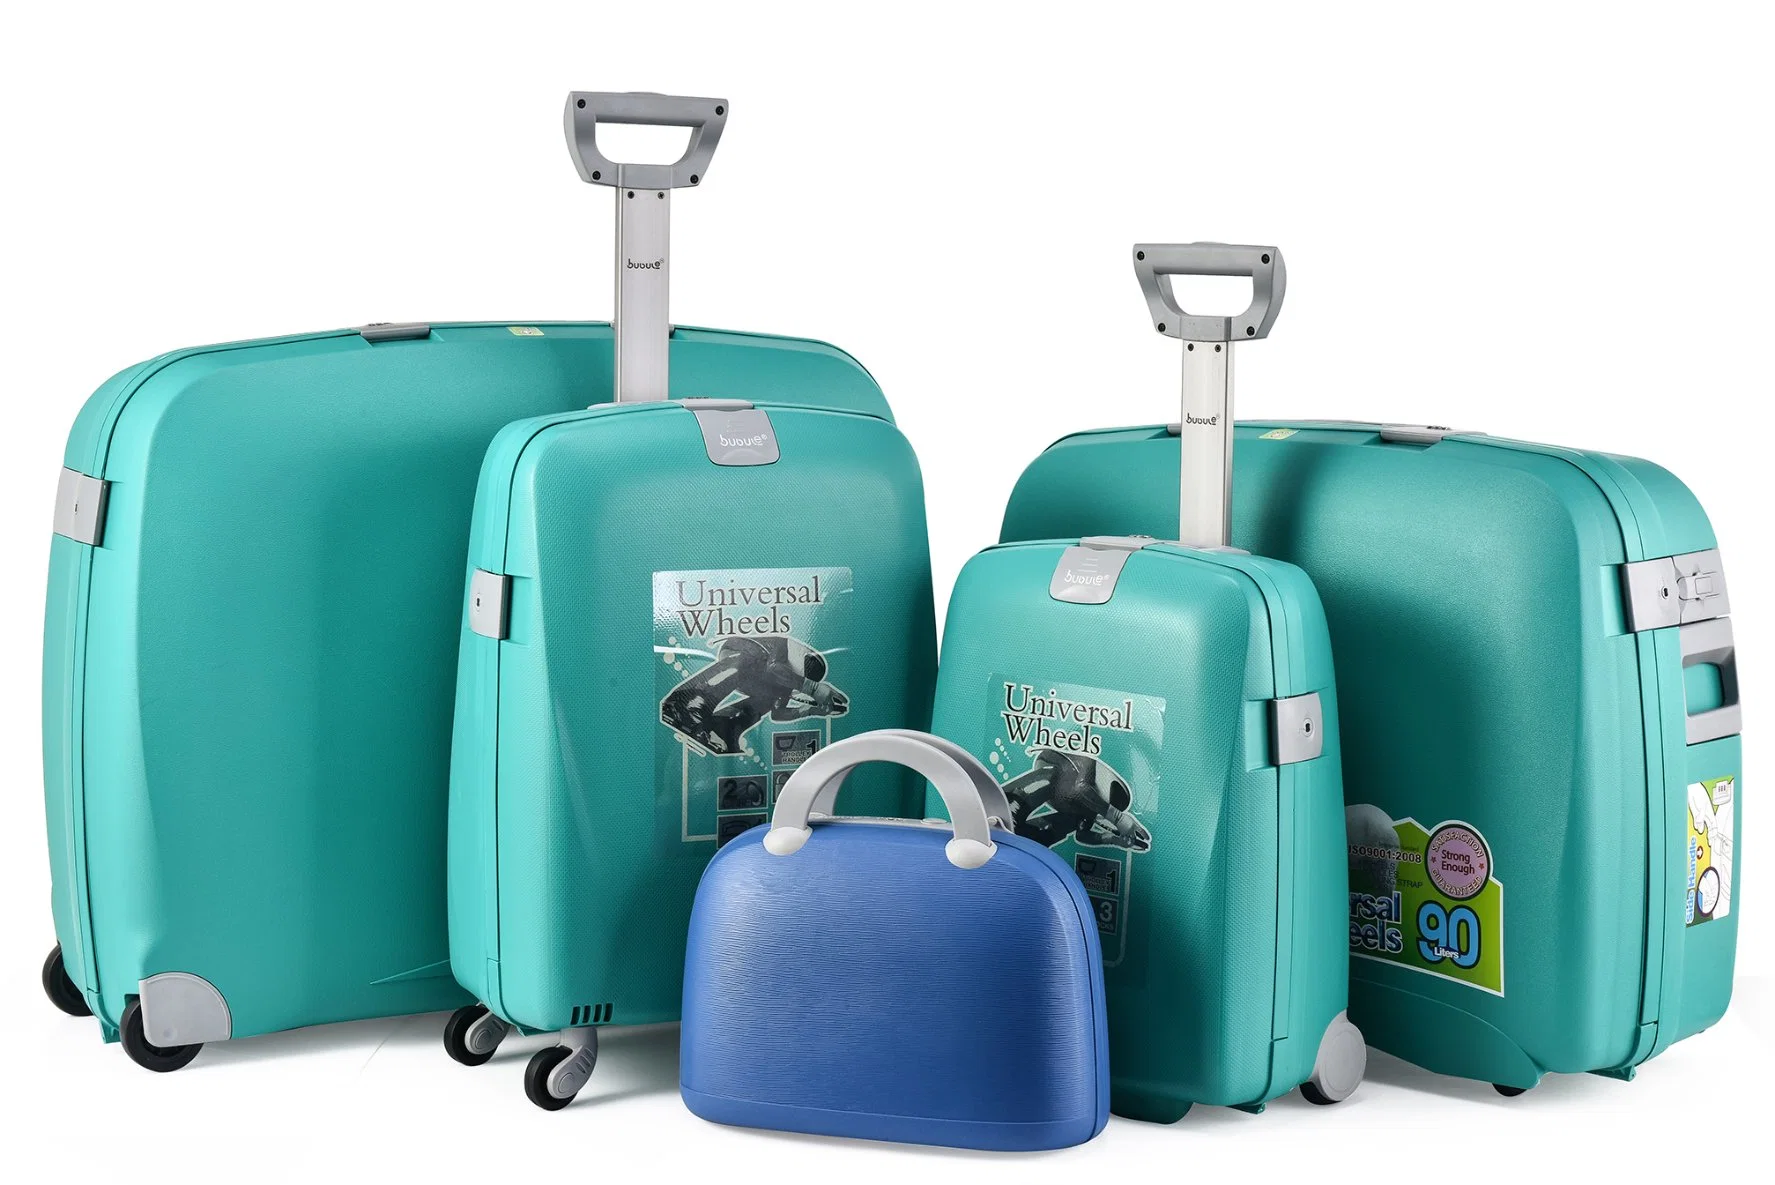 Bubule Fashion Vintage Travel Hand Suitcase Set Trolley Spinner Luggage (Sets)

مجموعة حقائب سفر بتصميم فنتج تراثي من بوبولي، مع عربة وعجلات دوارة.